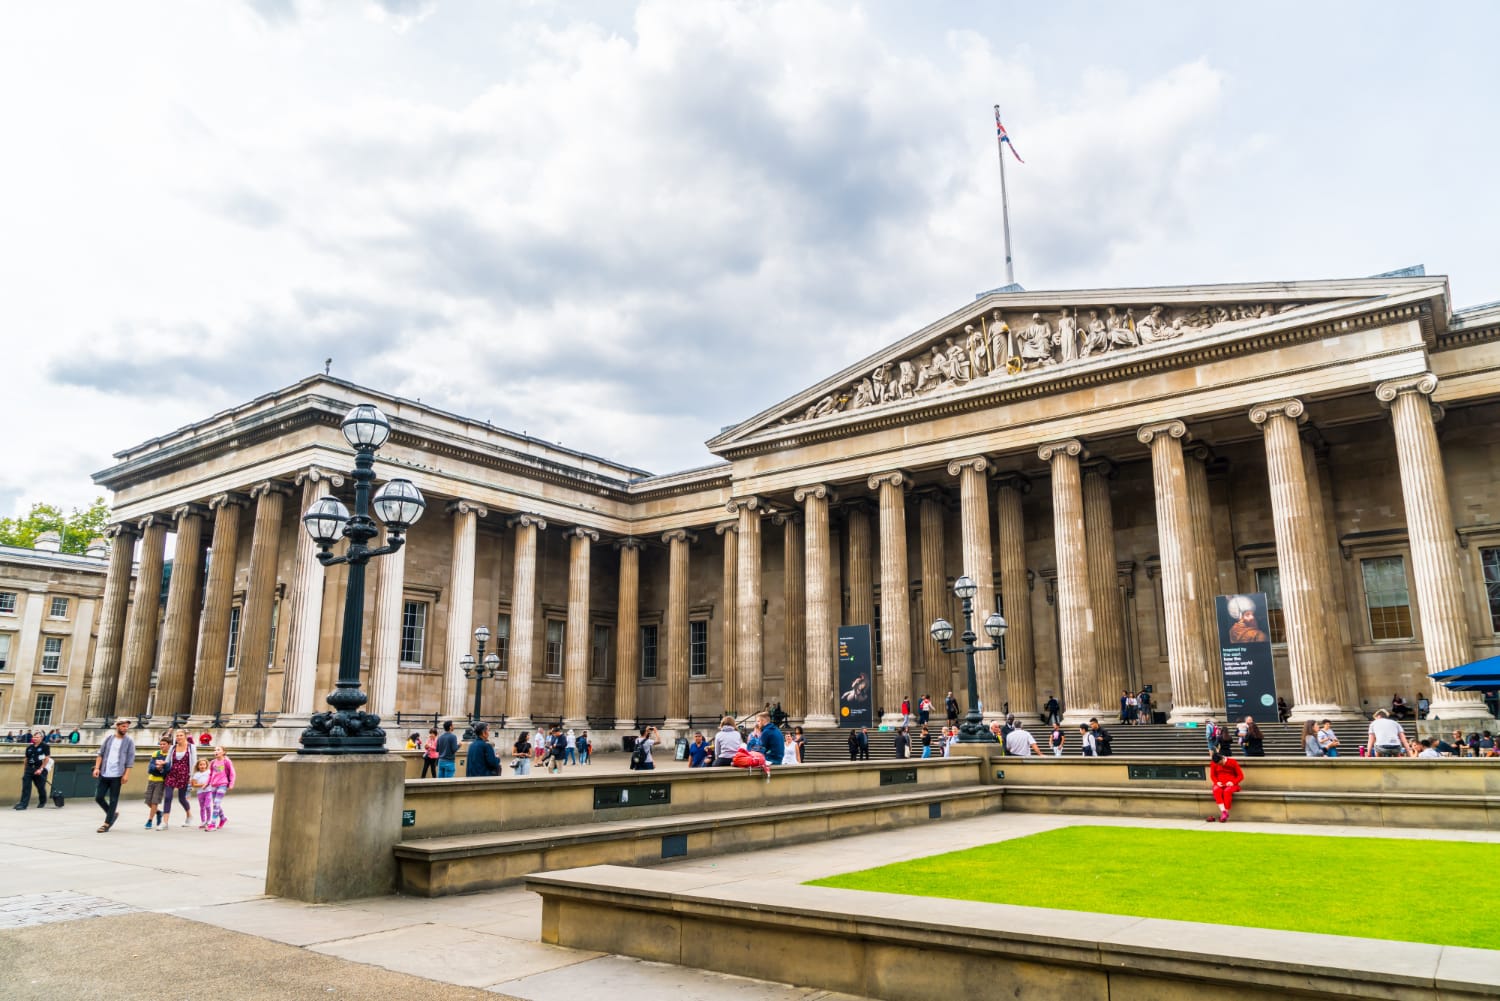 A londoni British Museum kincsei: az egyiptomi múmia átka